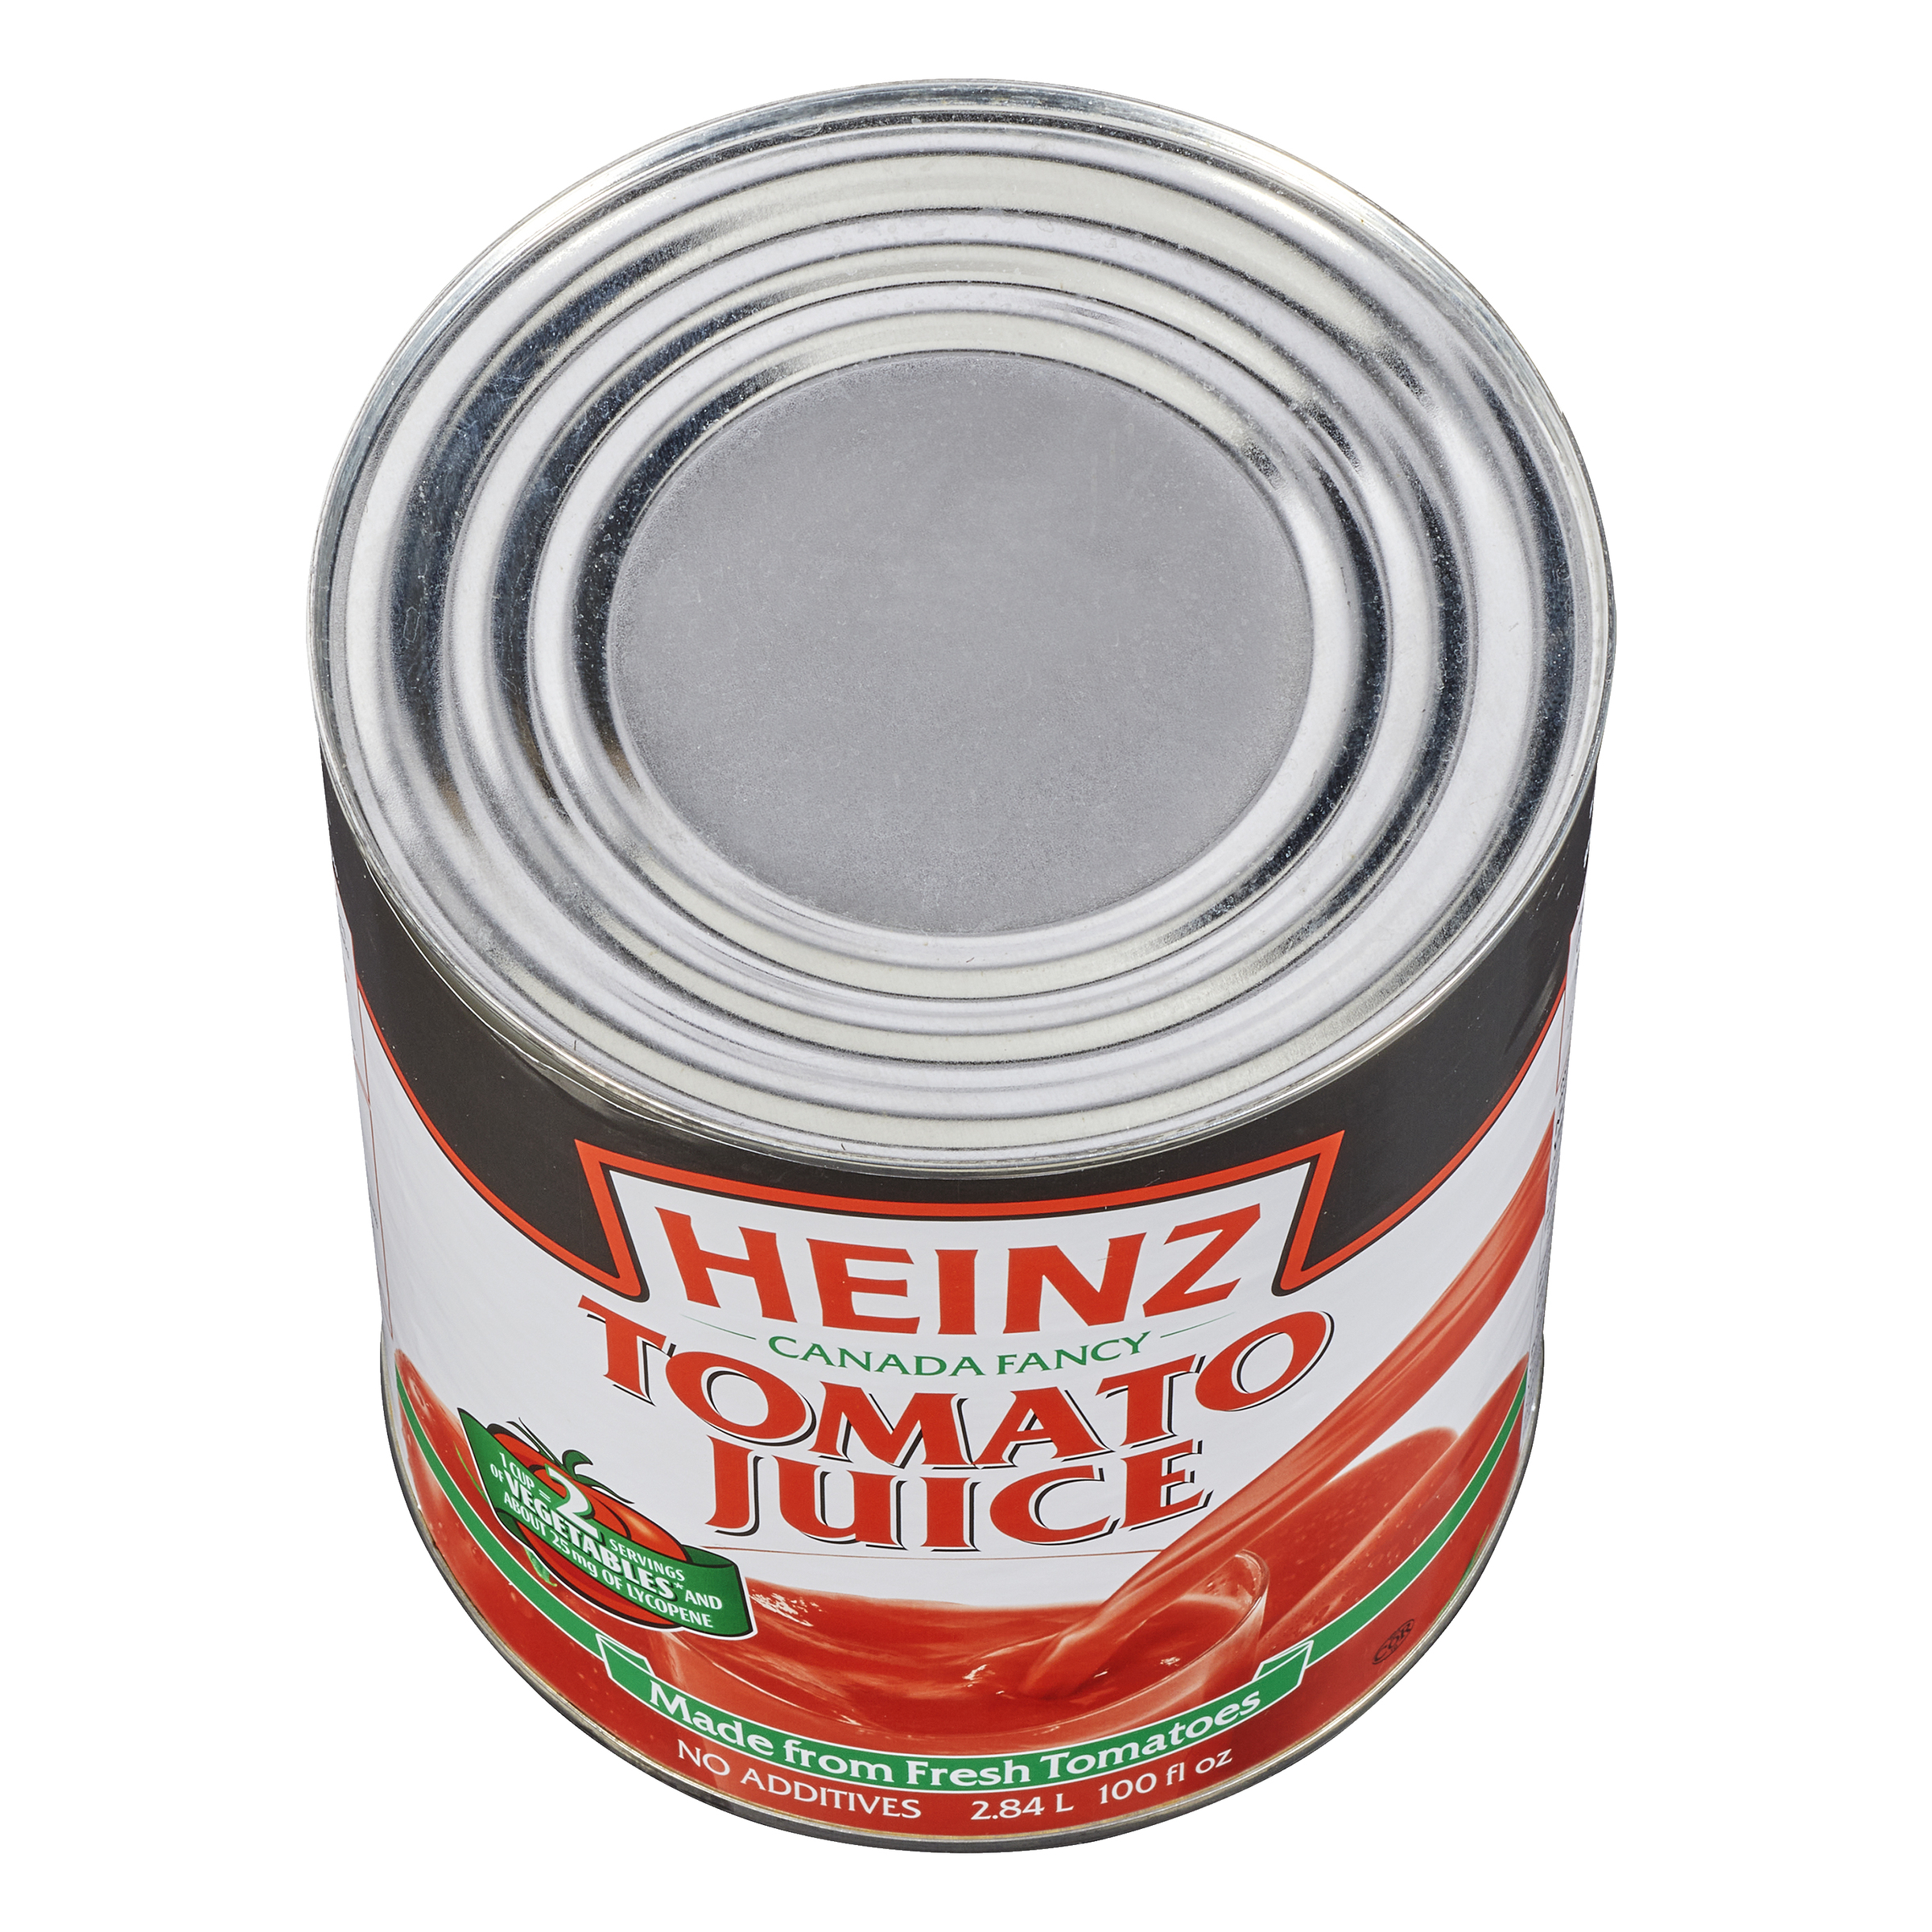 HEINZ Tomato Juice Ready to Drink 2.84L 6